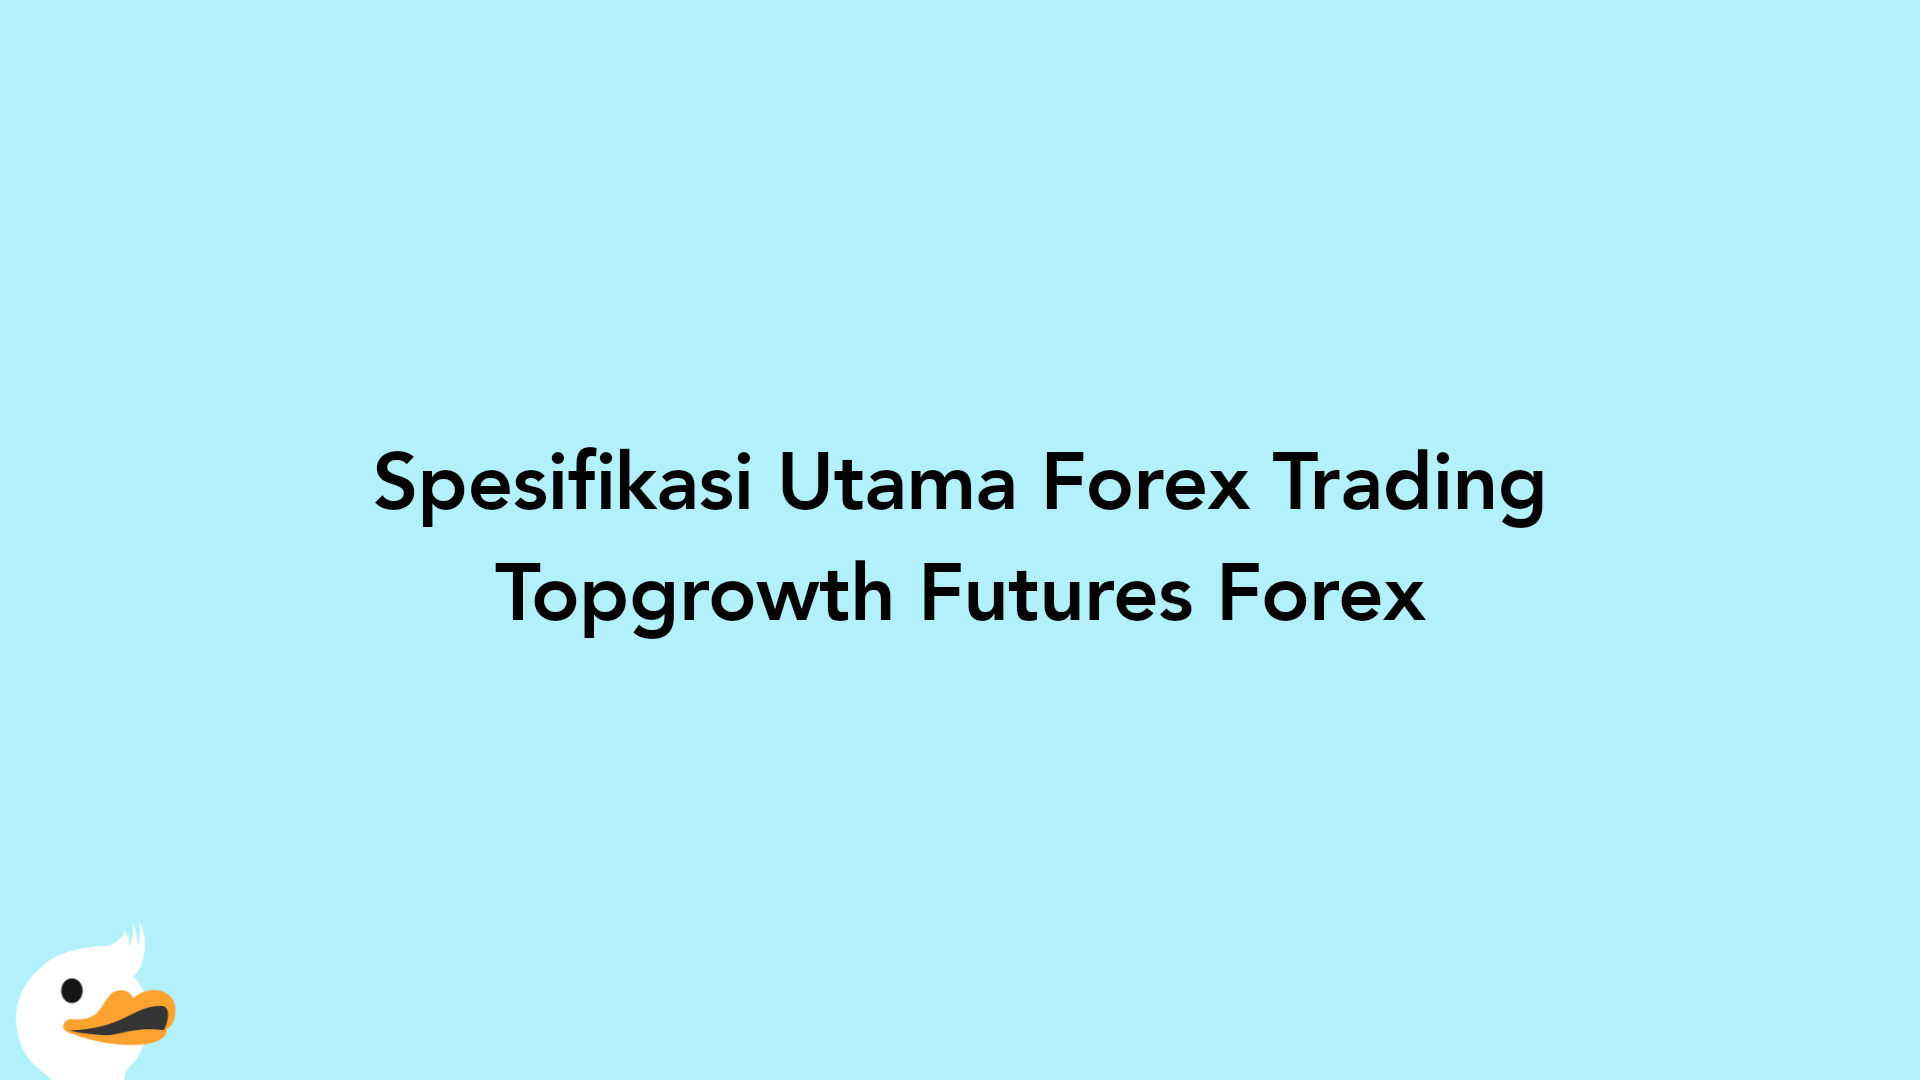 Spesifikasi Utama Forex Trading Topgrowth Futures Forex